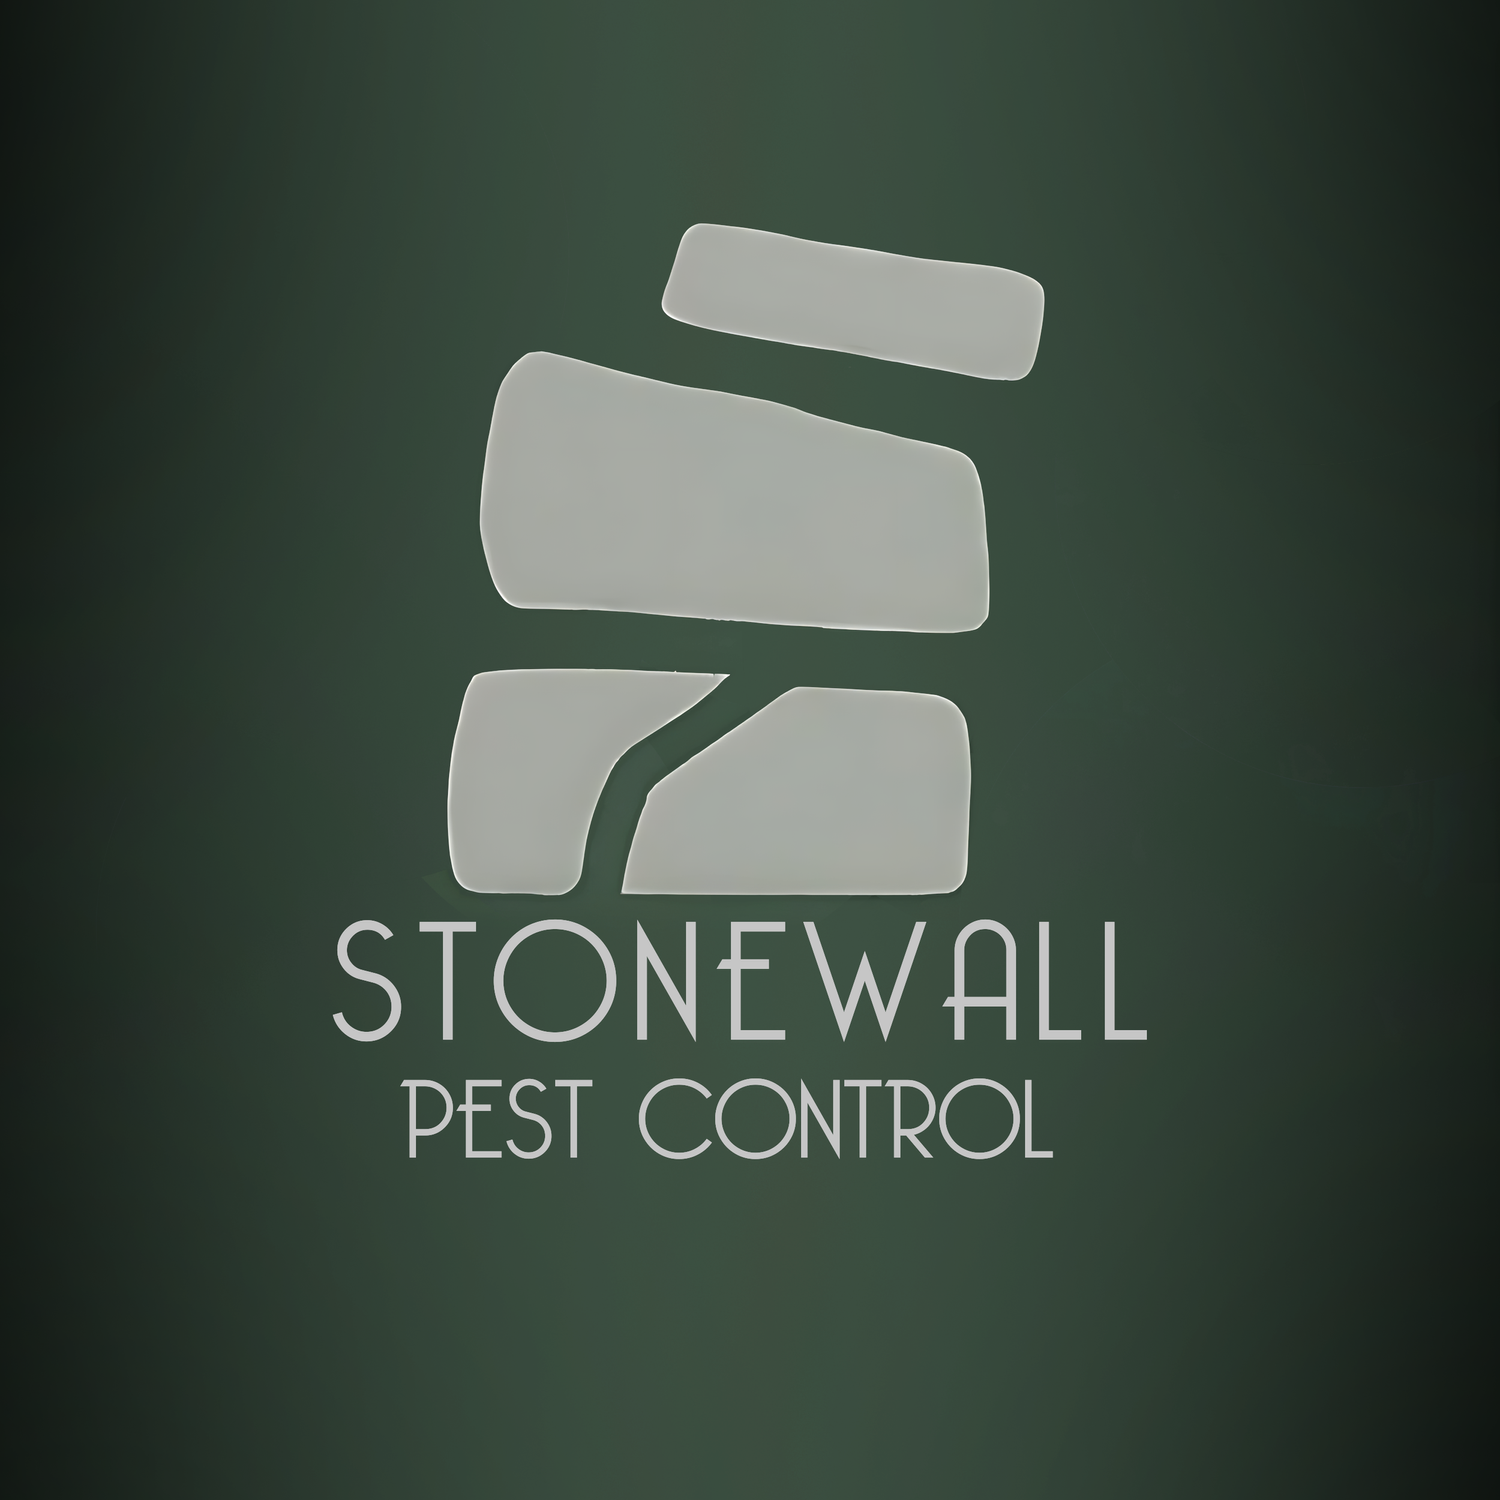 Stonewall Pest Control